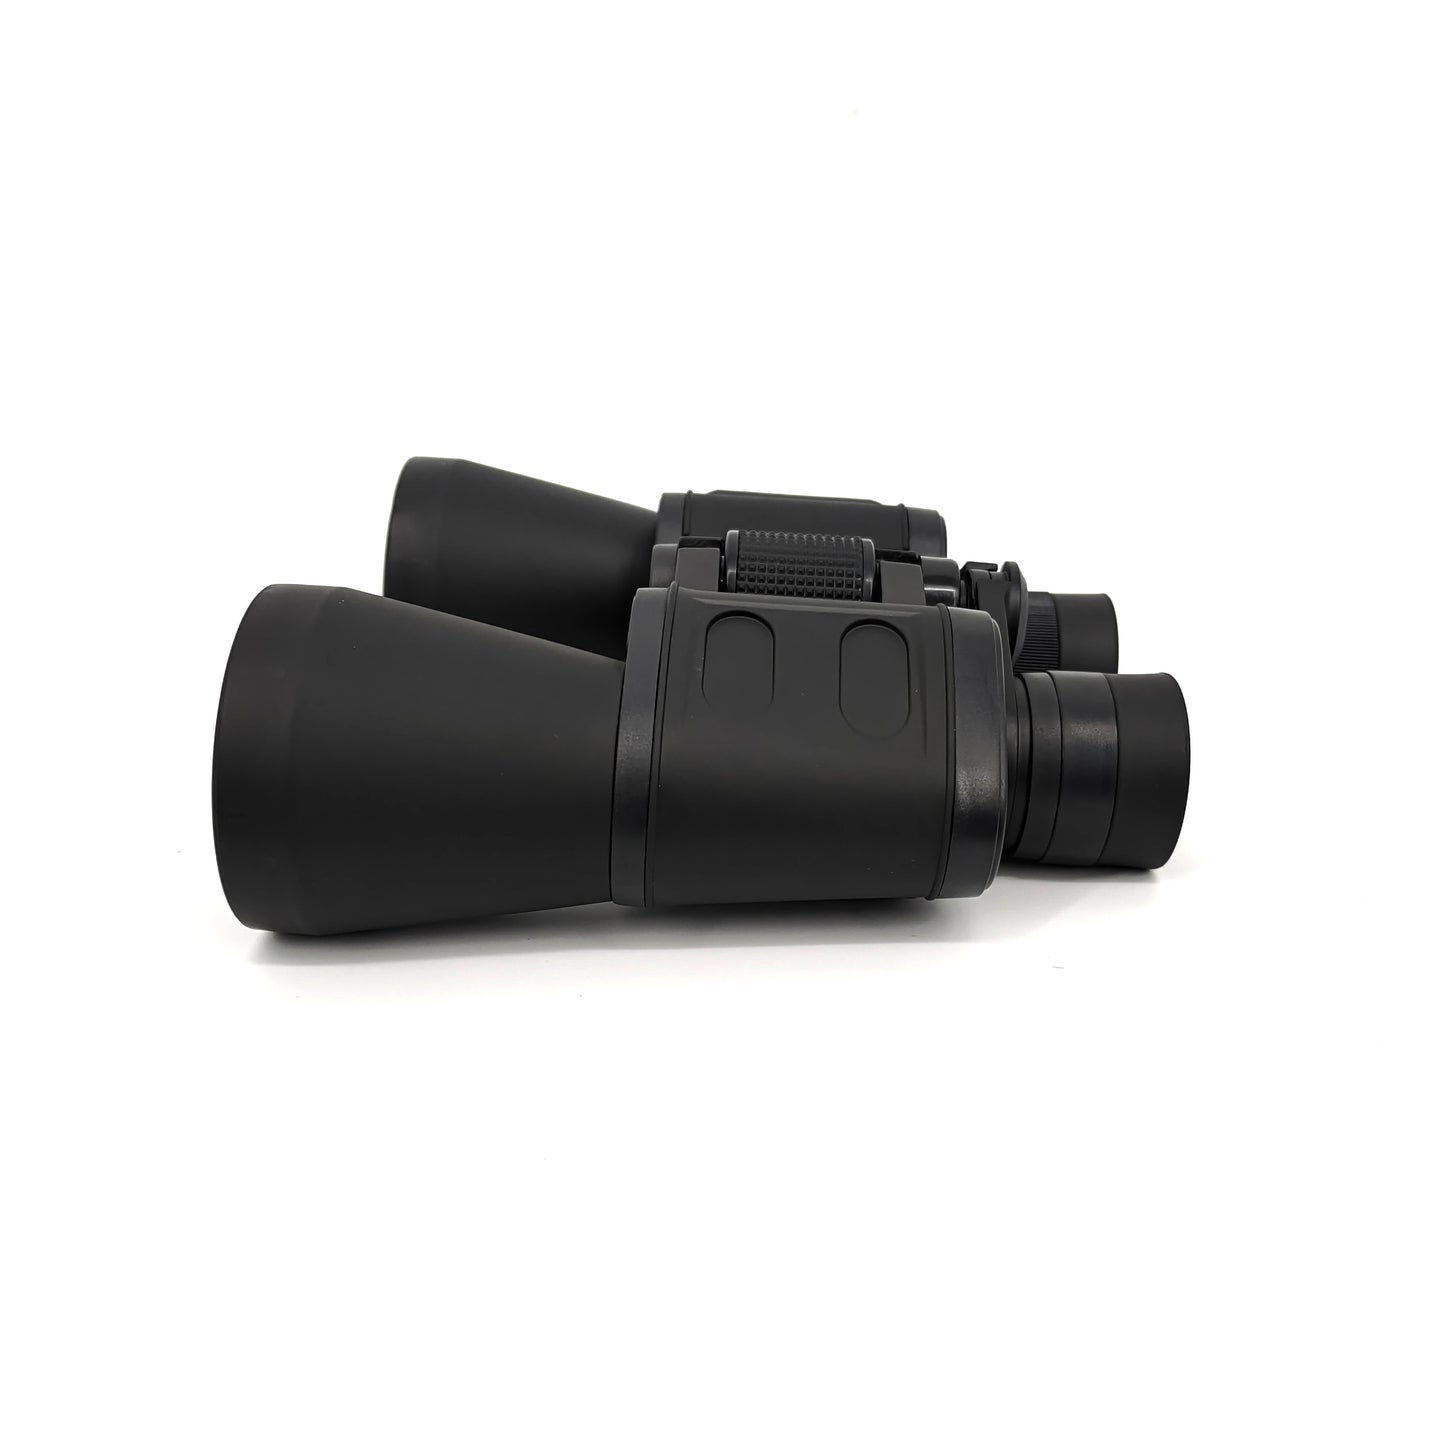 Rothco 10 x 50MM Binoculars